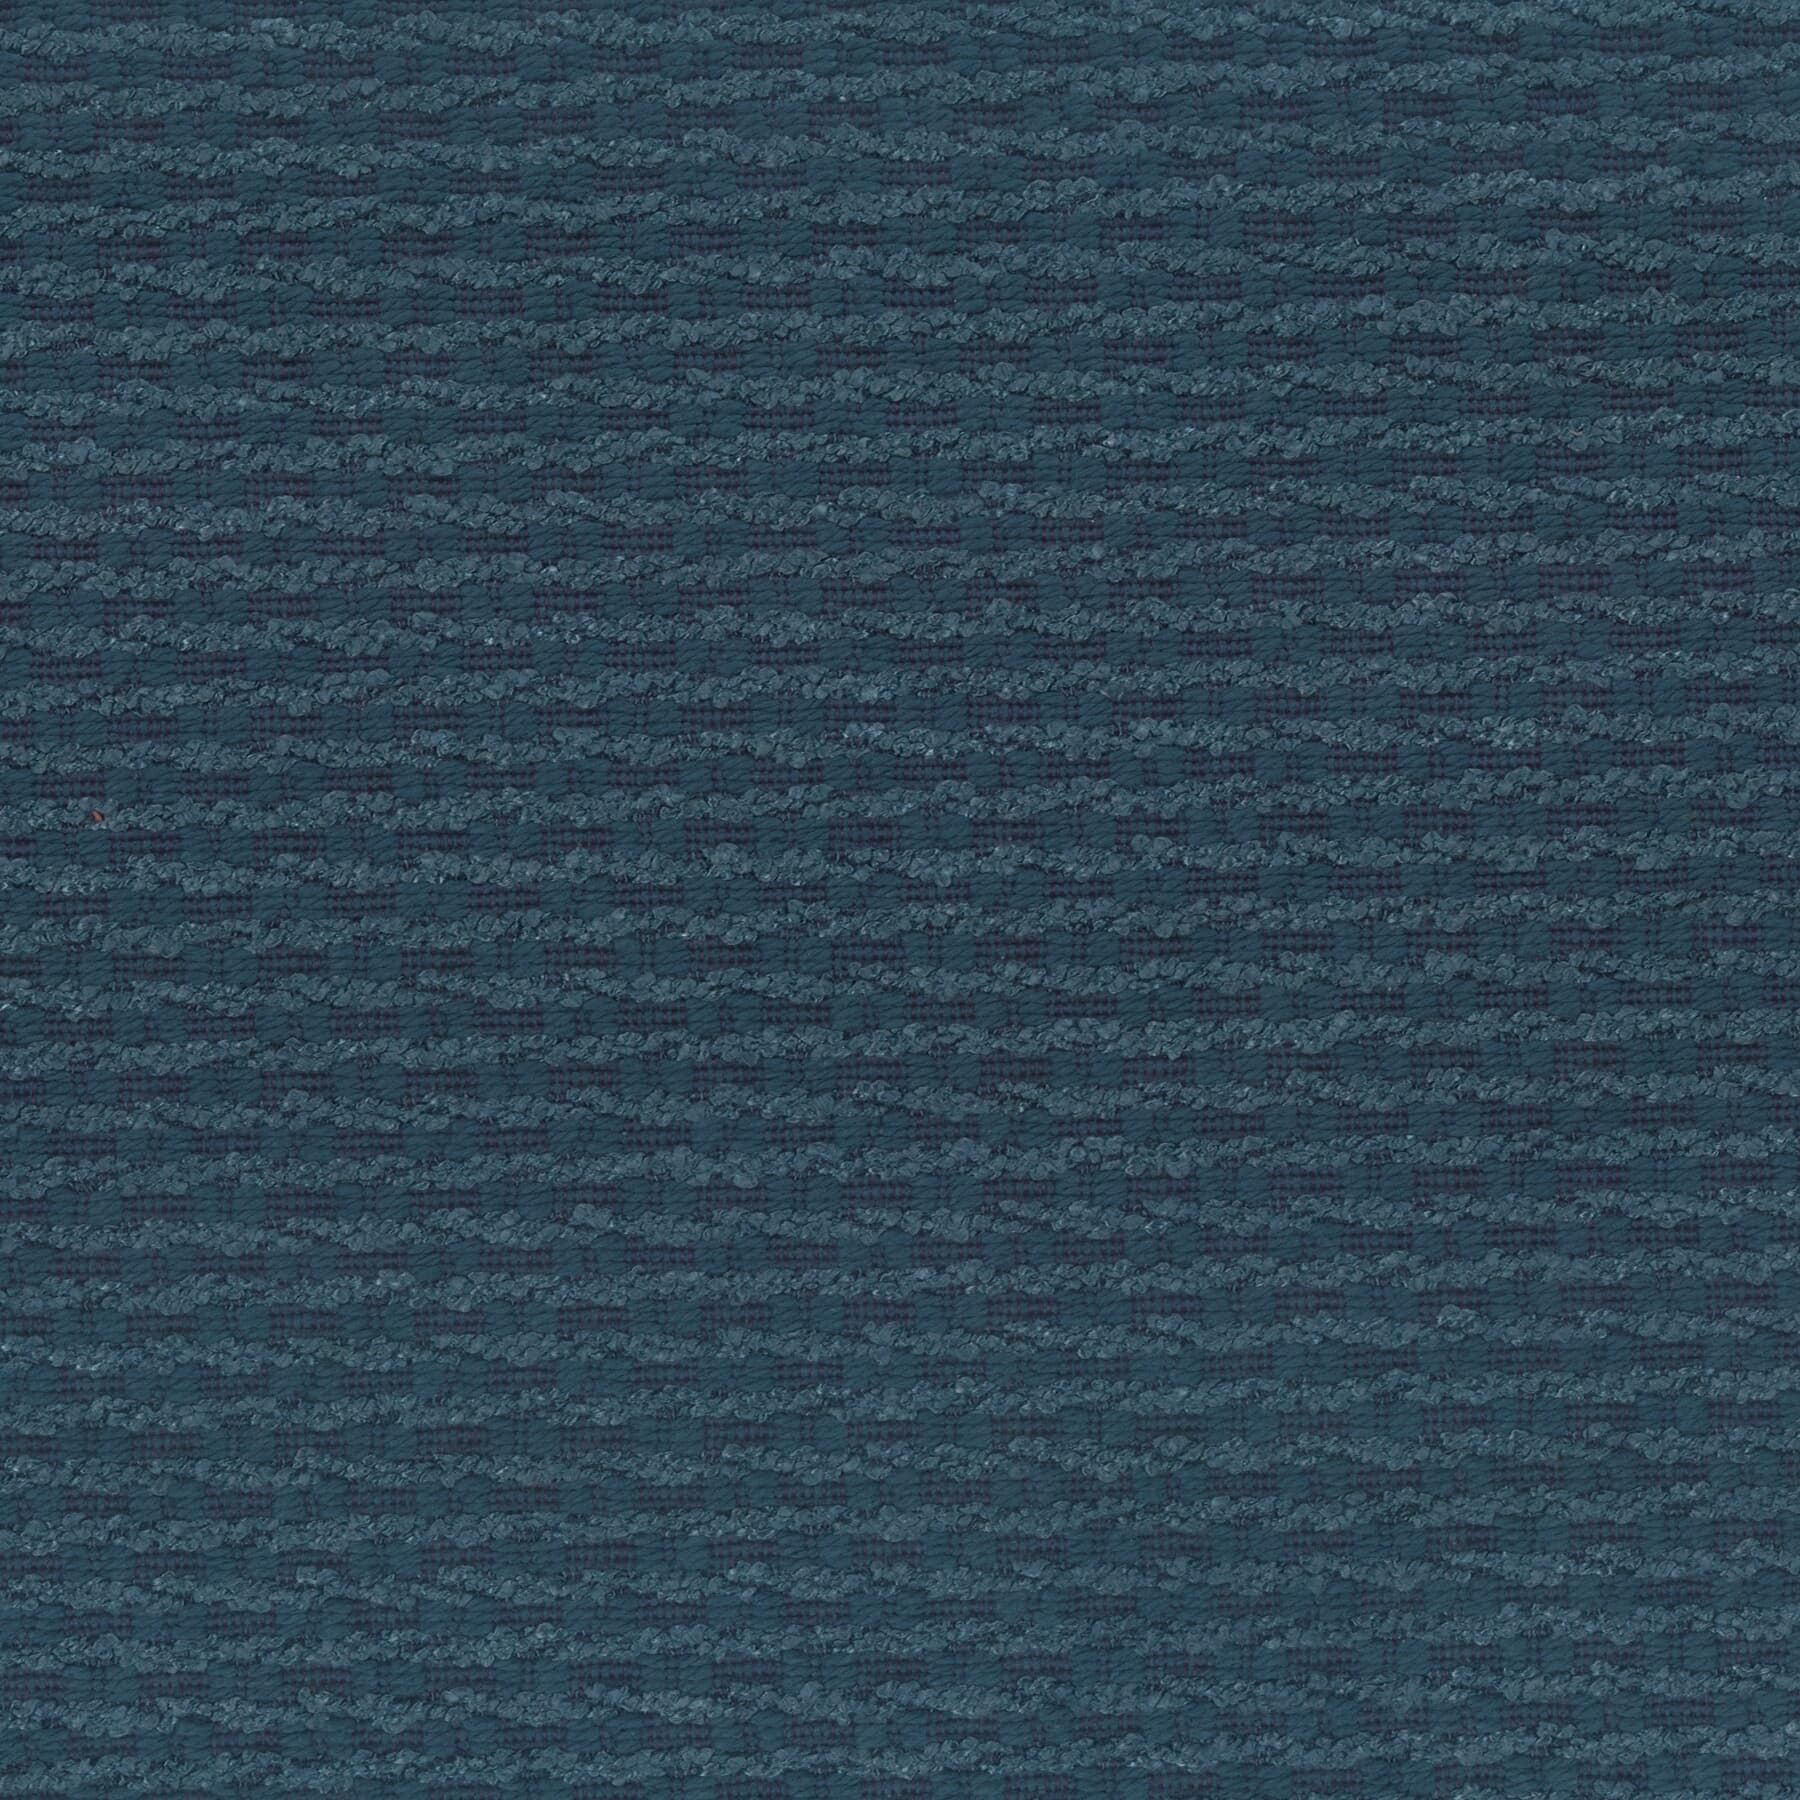 7716-3 Sisal Plain by Stout Fabric